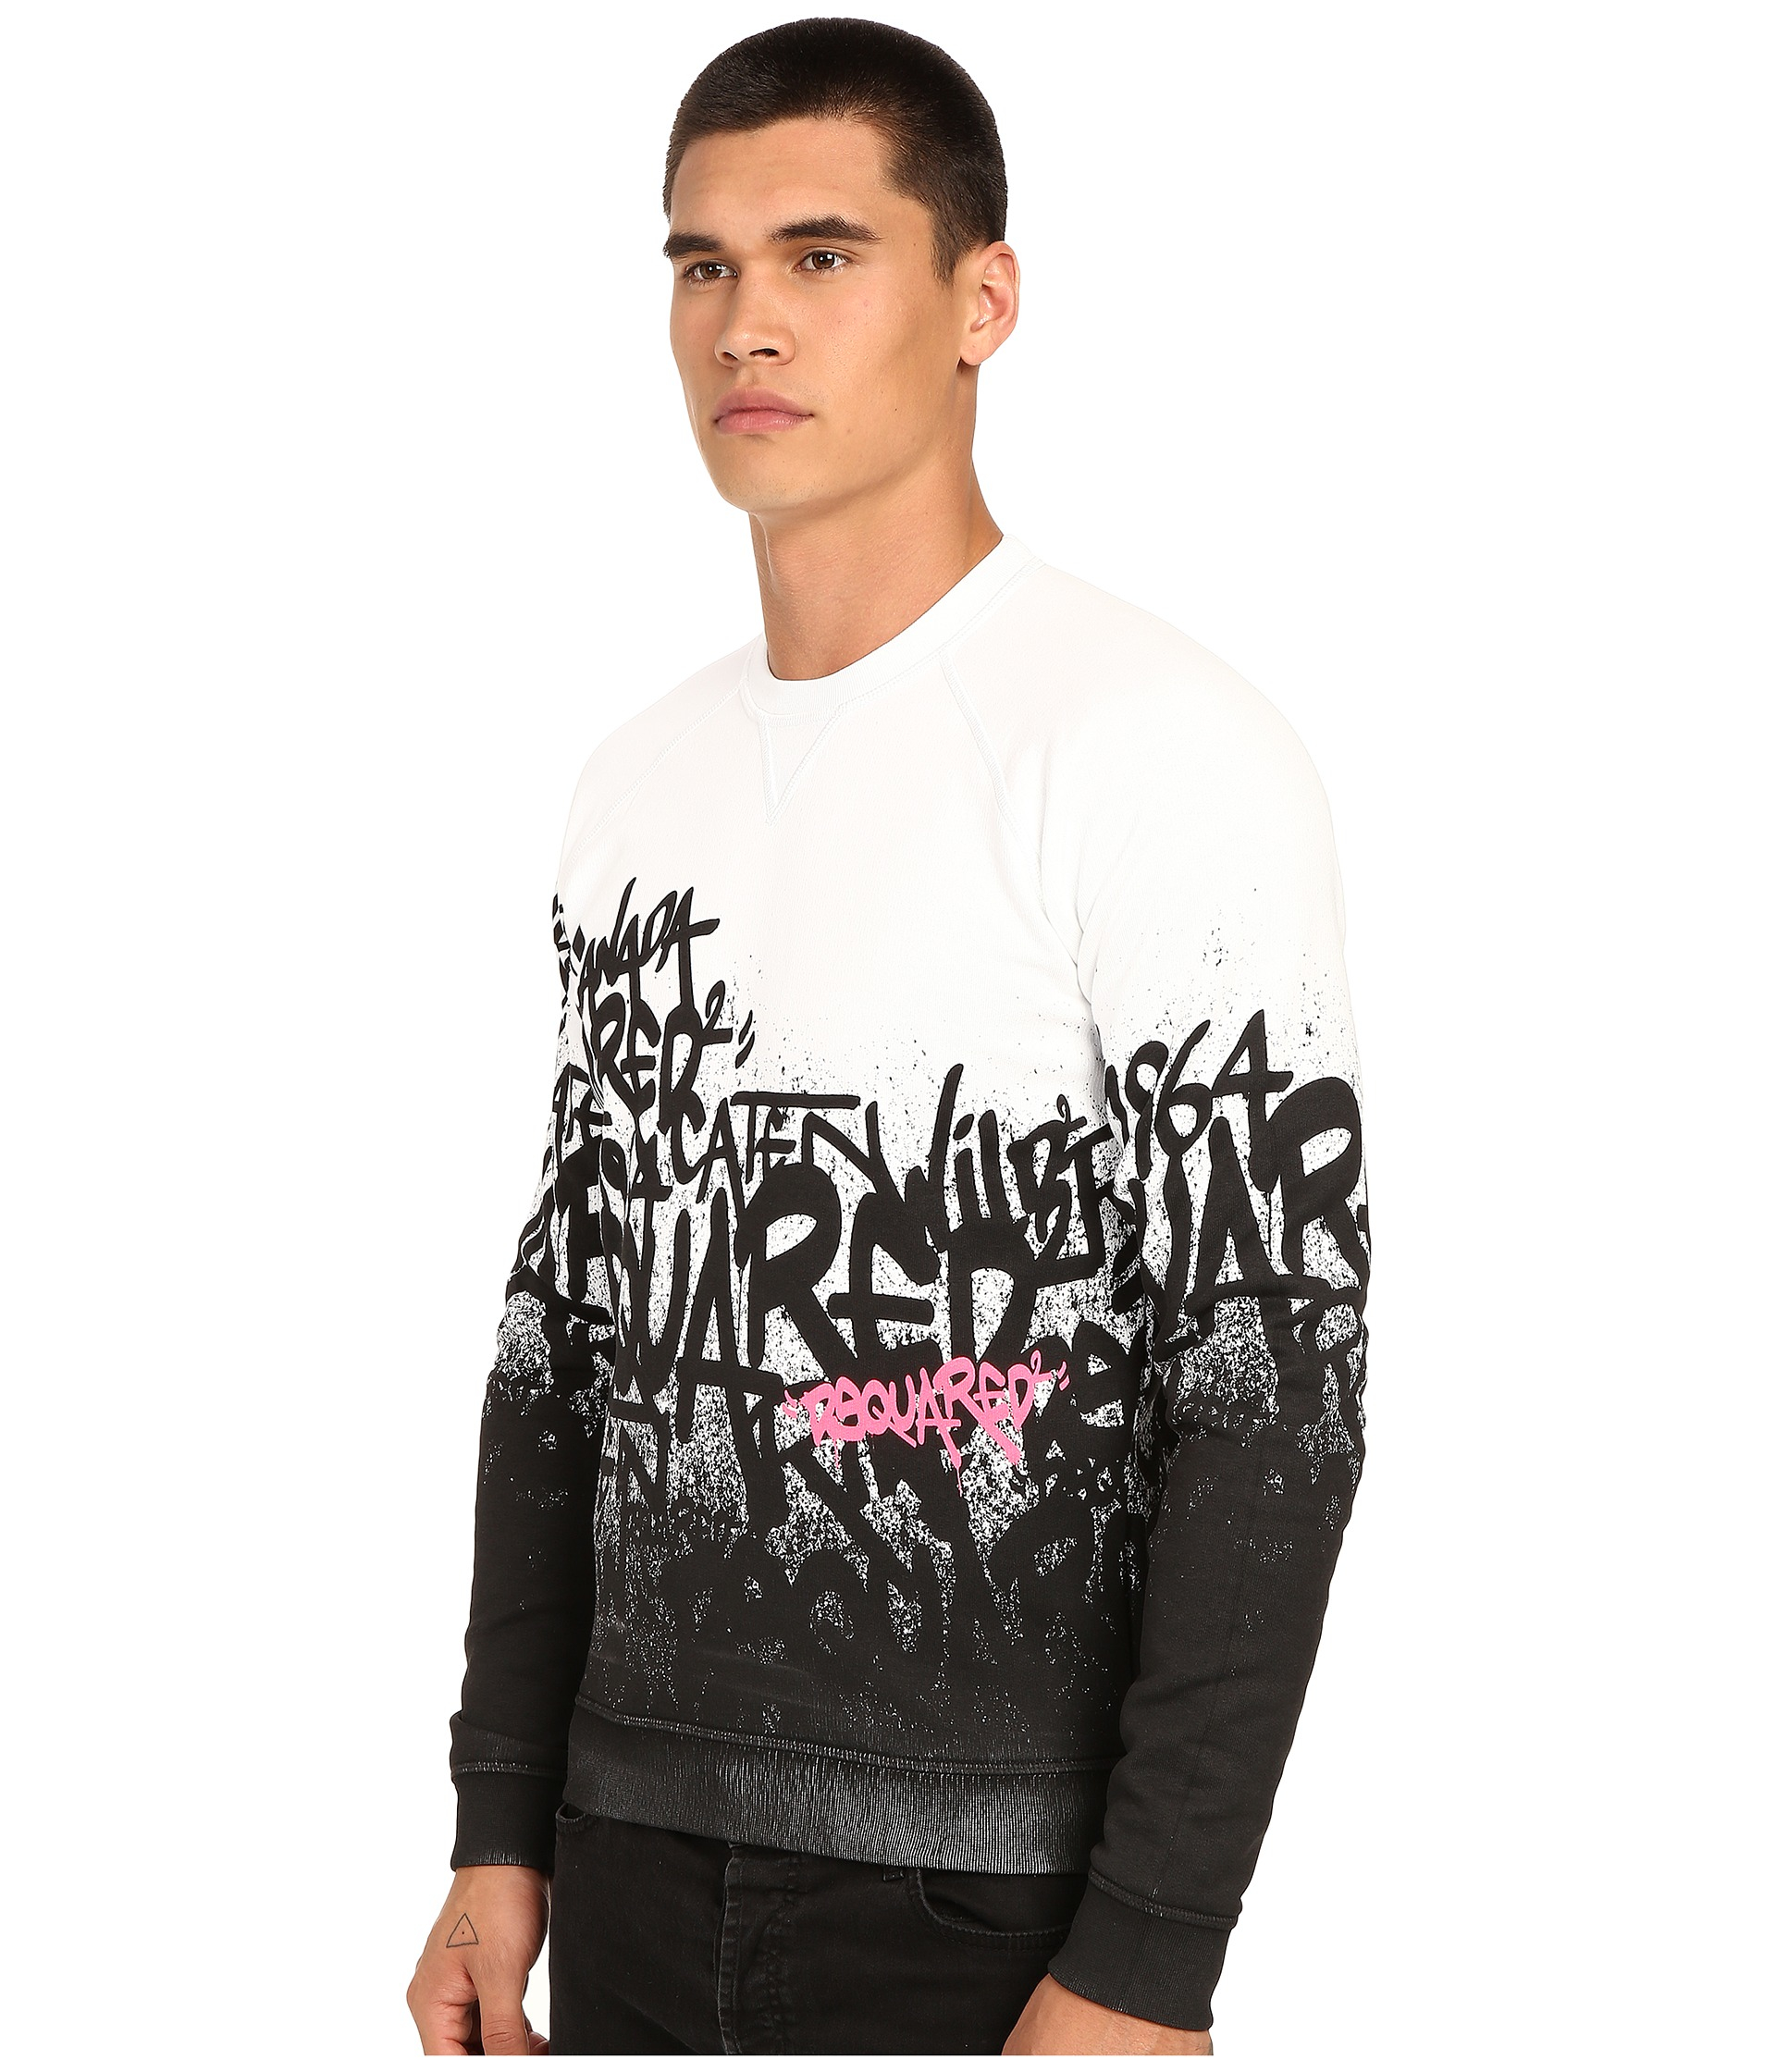 Lyst - DSquared² Graffiti Print Sweatshirt in Black for Men